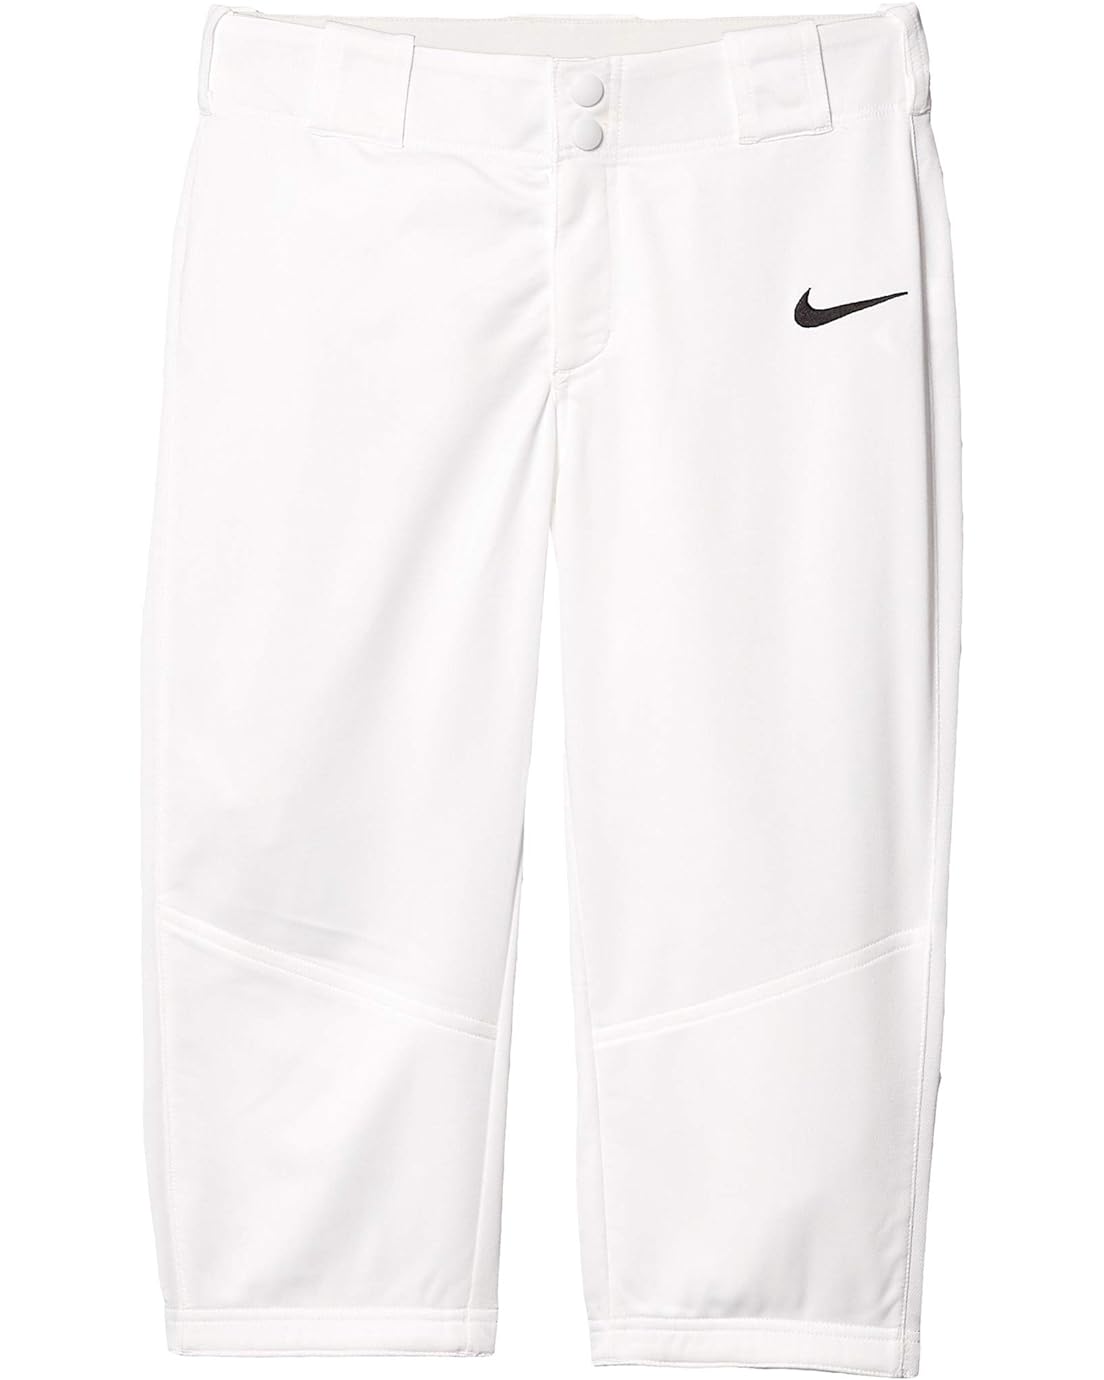 Nike Kids Core Softball Pants (Big Kids)